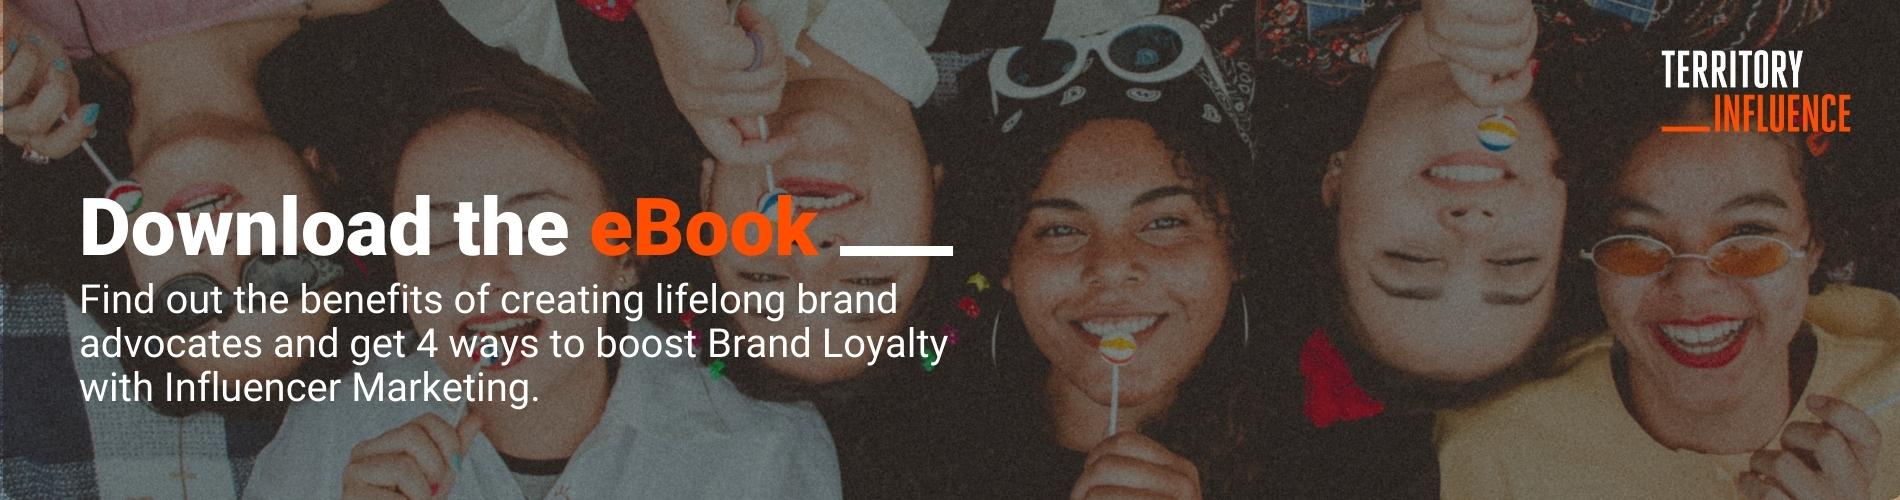 INT - Brand Loyalty eBook